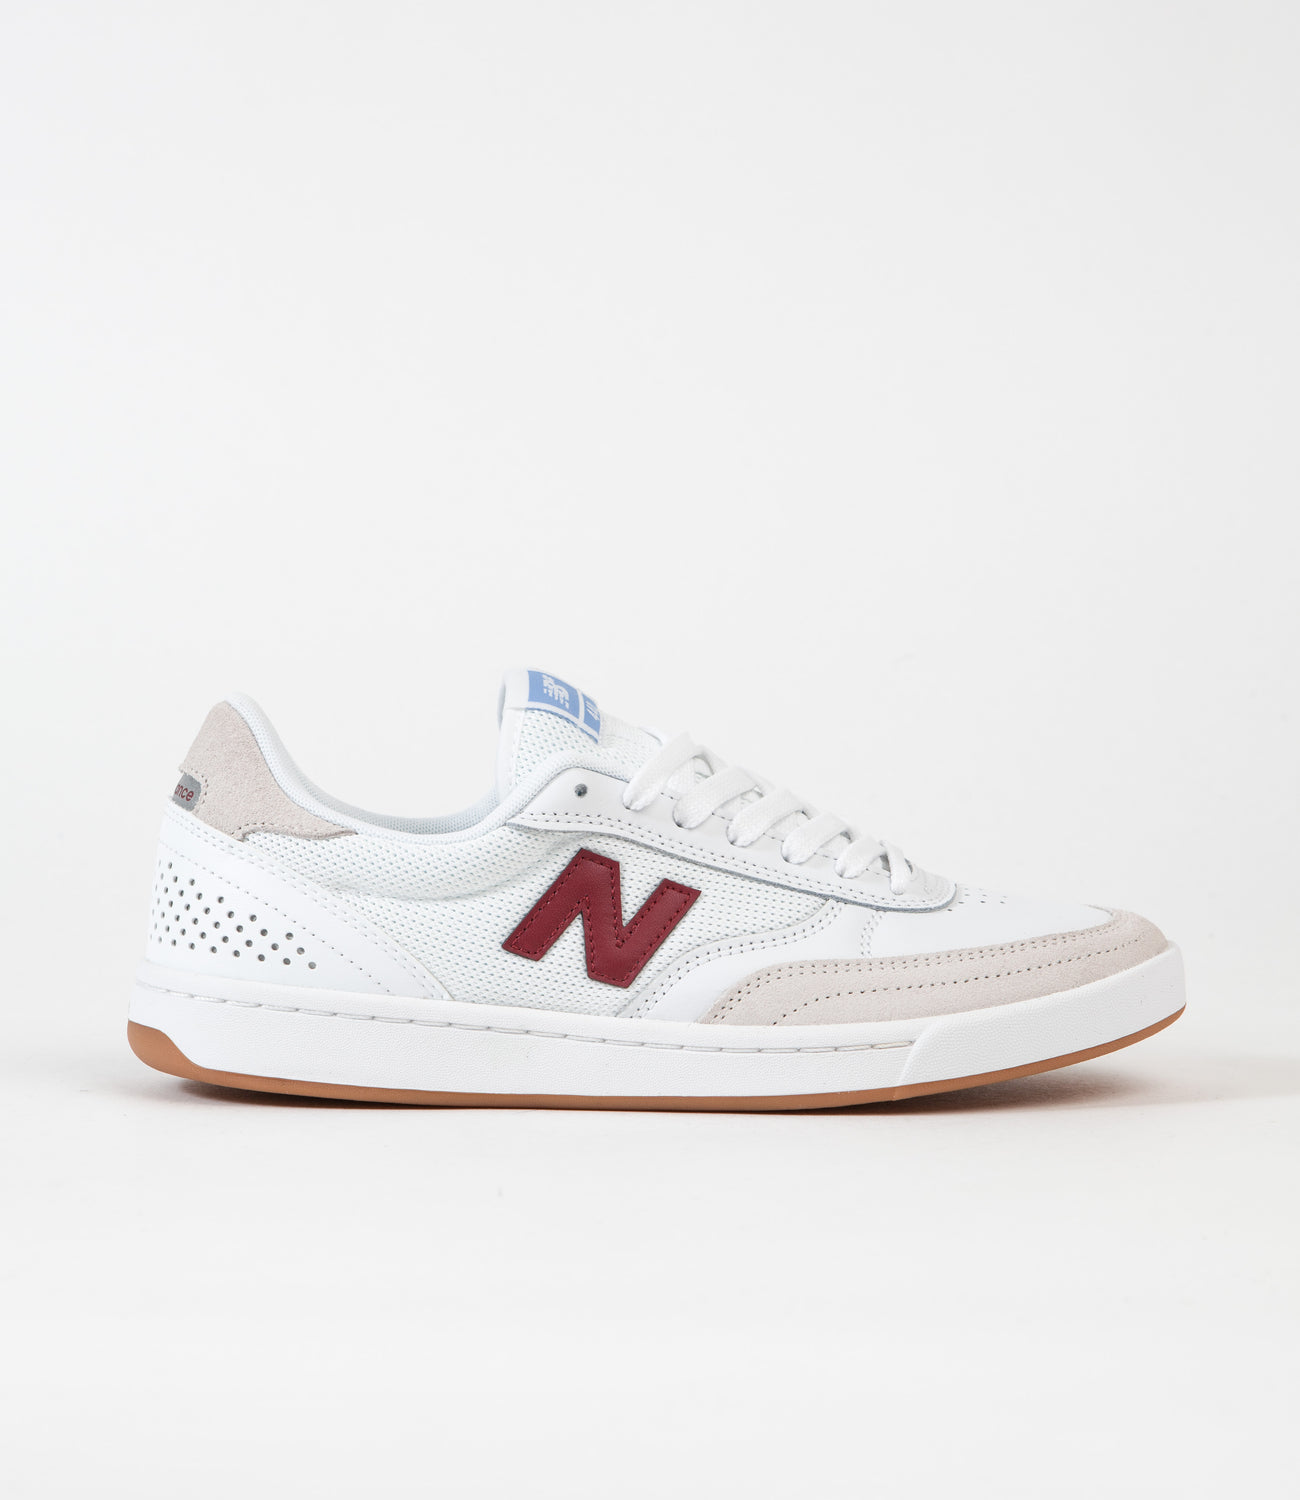 New Balance Numeric 440 Shoes - White / Burgundy | Flatspot